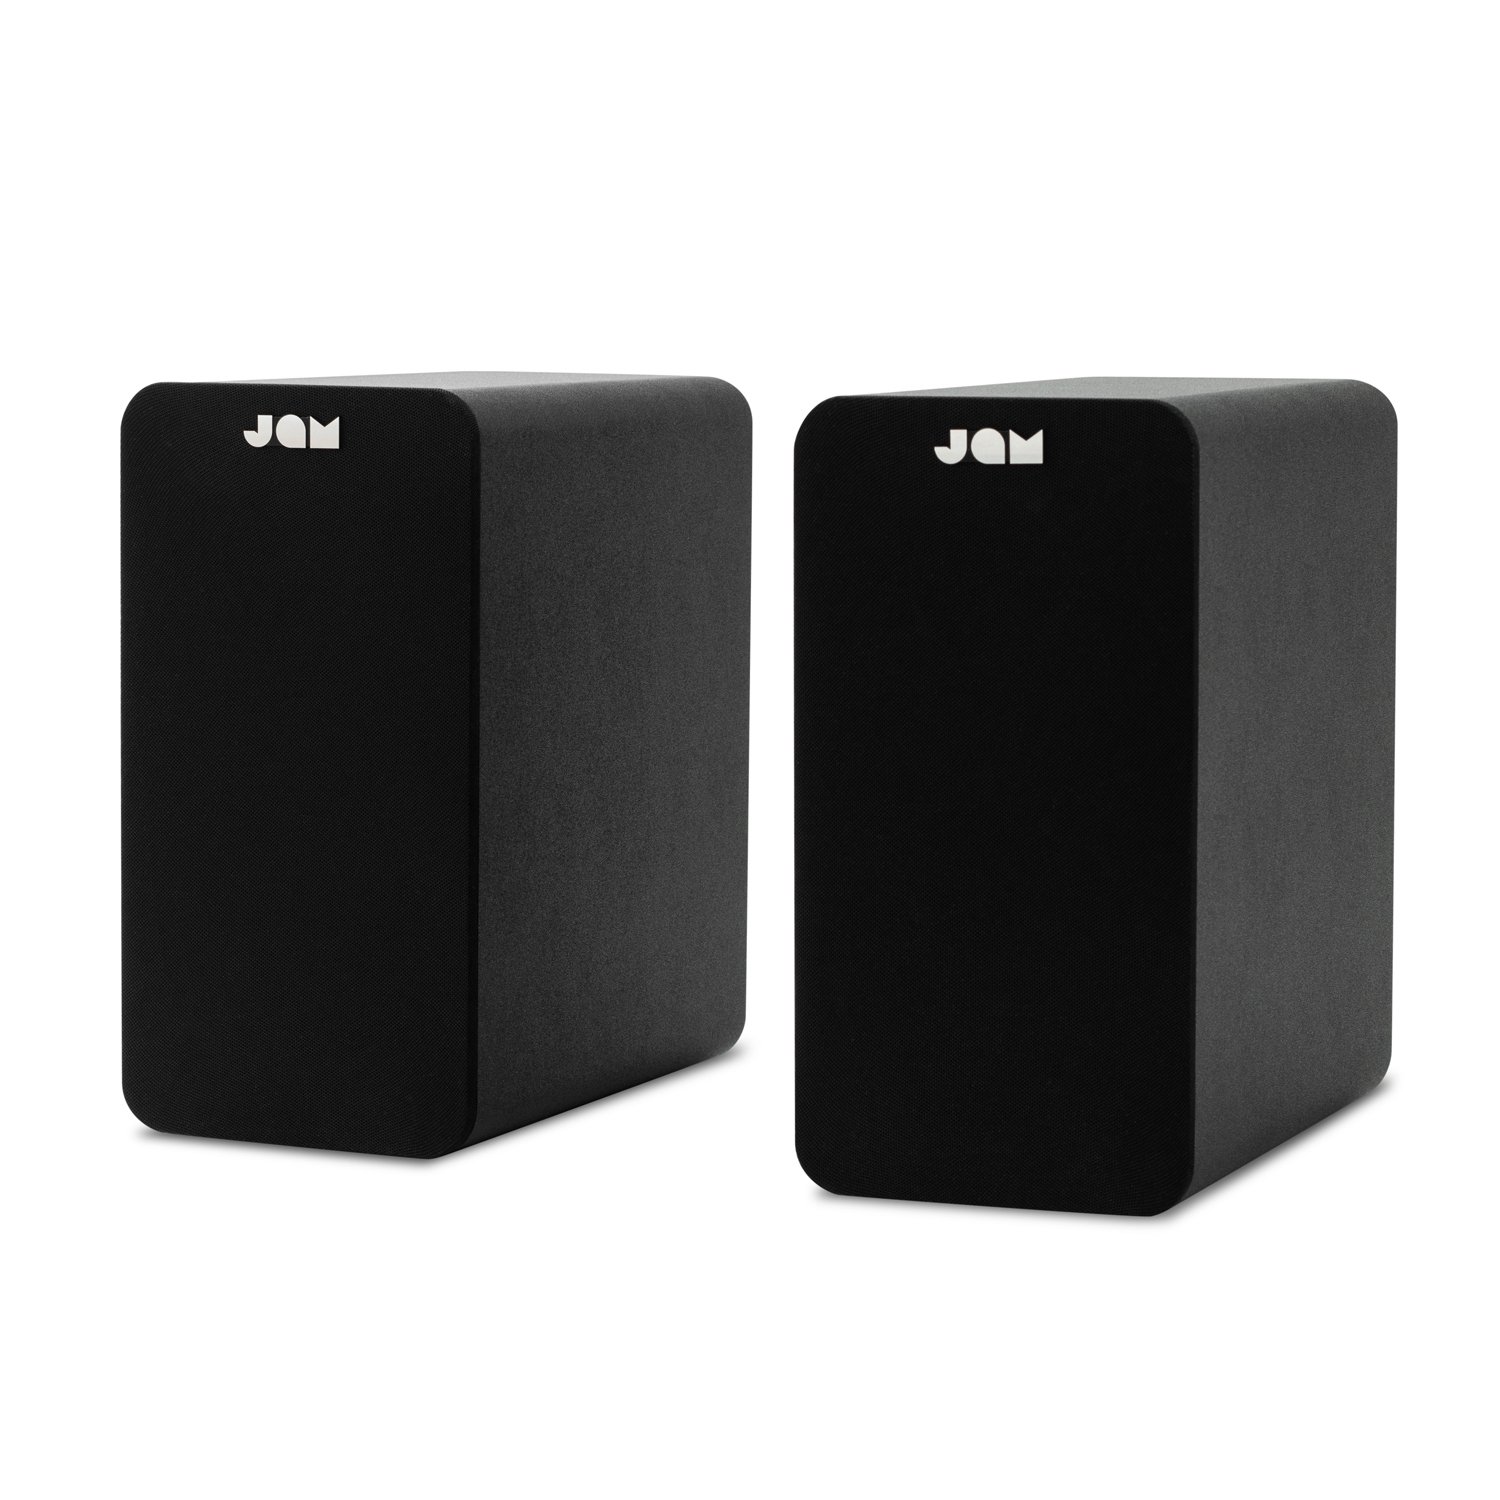 Jam Bookshelf Bluetooth Speakers Review